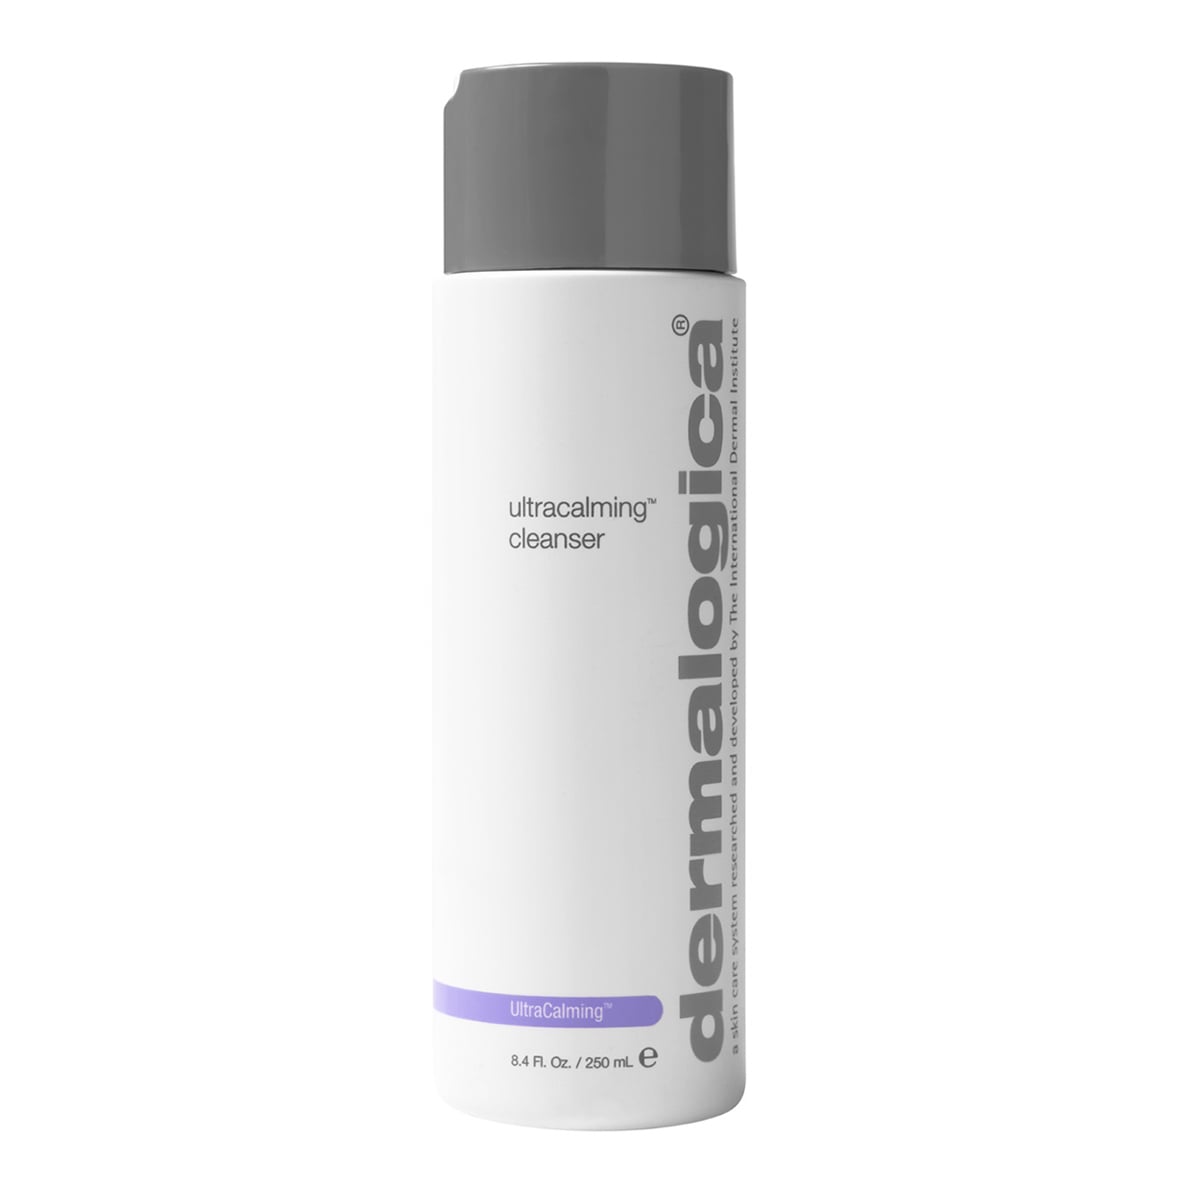 Billede af Dermalogica Ultracalming Cleanser 250 ml hos Staybeautiful